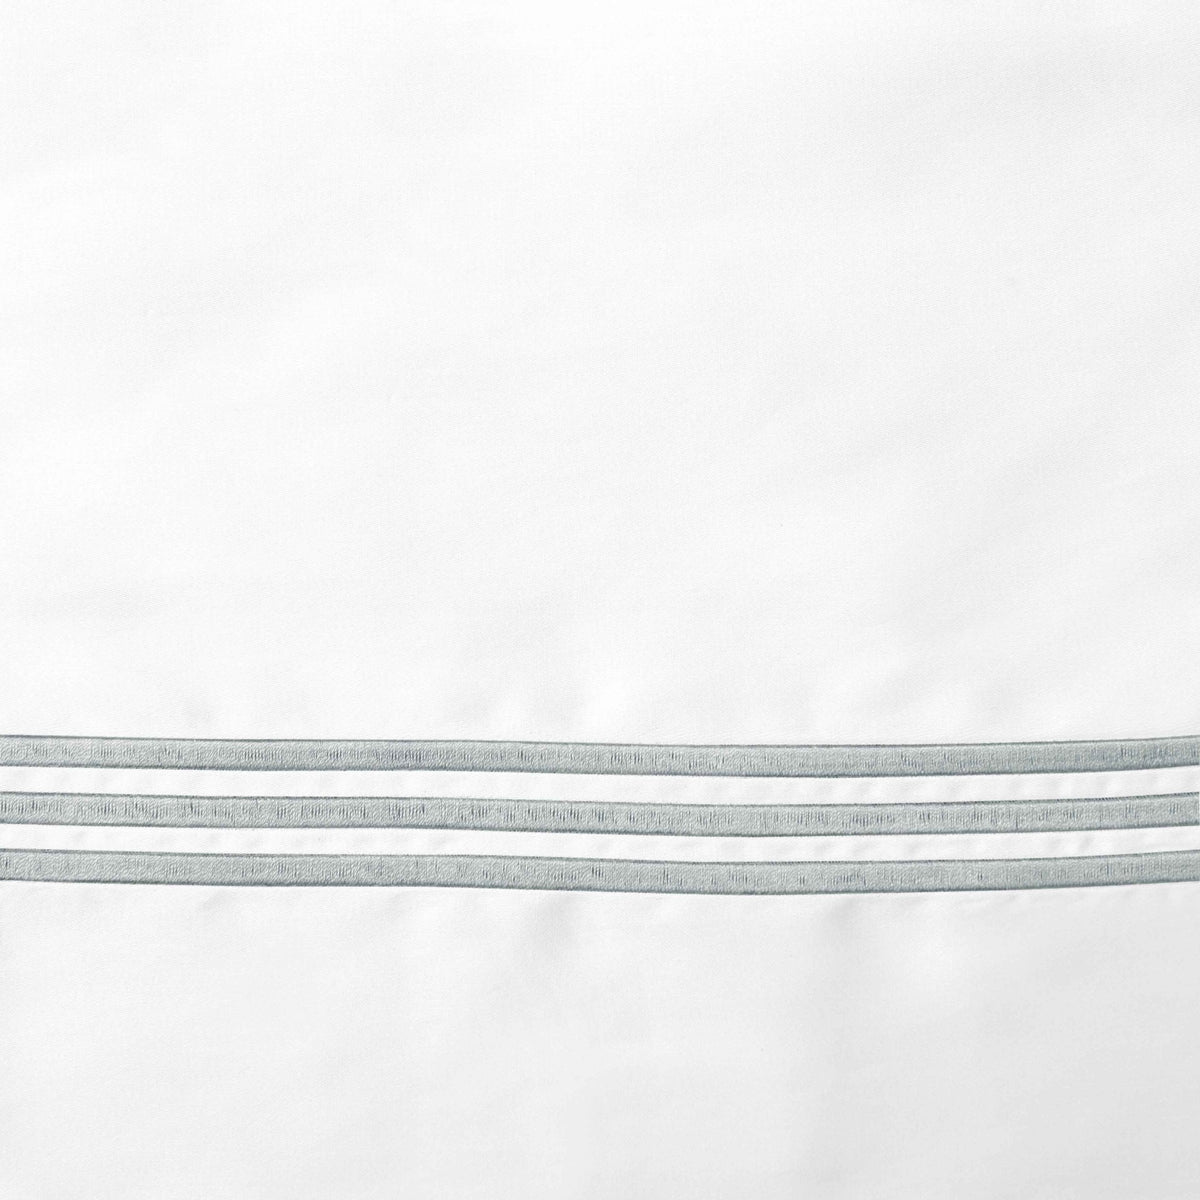 Swatch Sample of Signoria Platinum Sateen Bedding in White/Wilton Blue Color